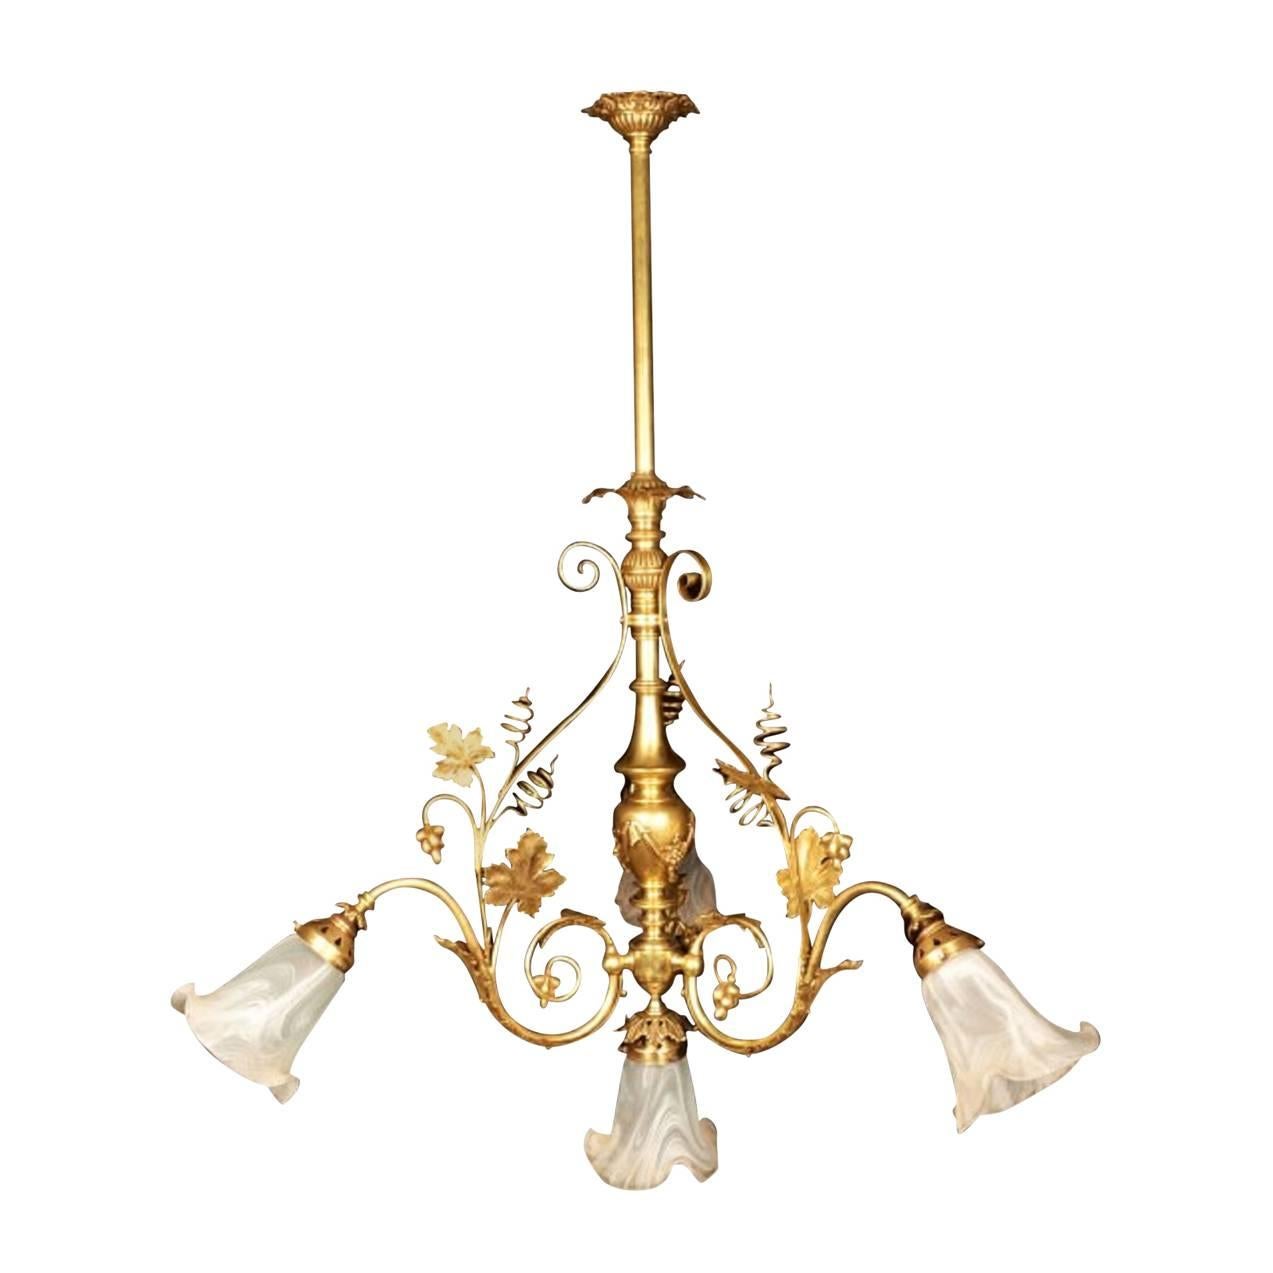 Early 20th Century Art Nouveau Four-Light Brass Chandelier